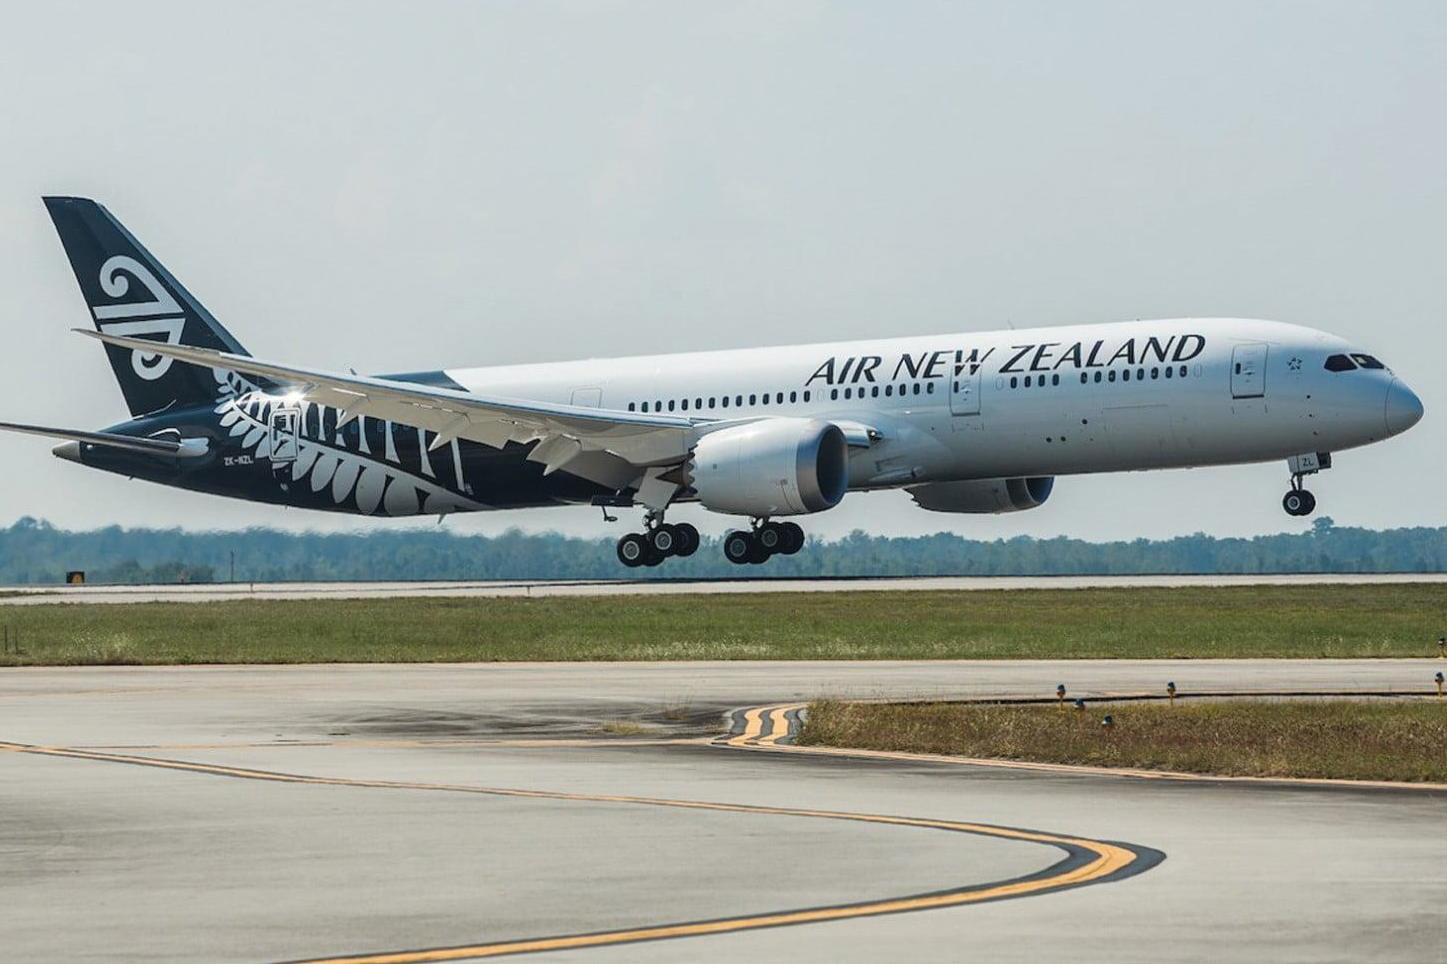 Air New Zealand passenger's joke backfired